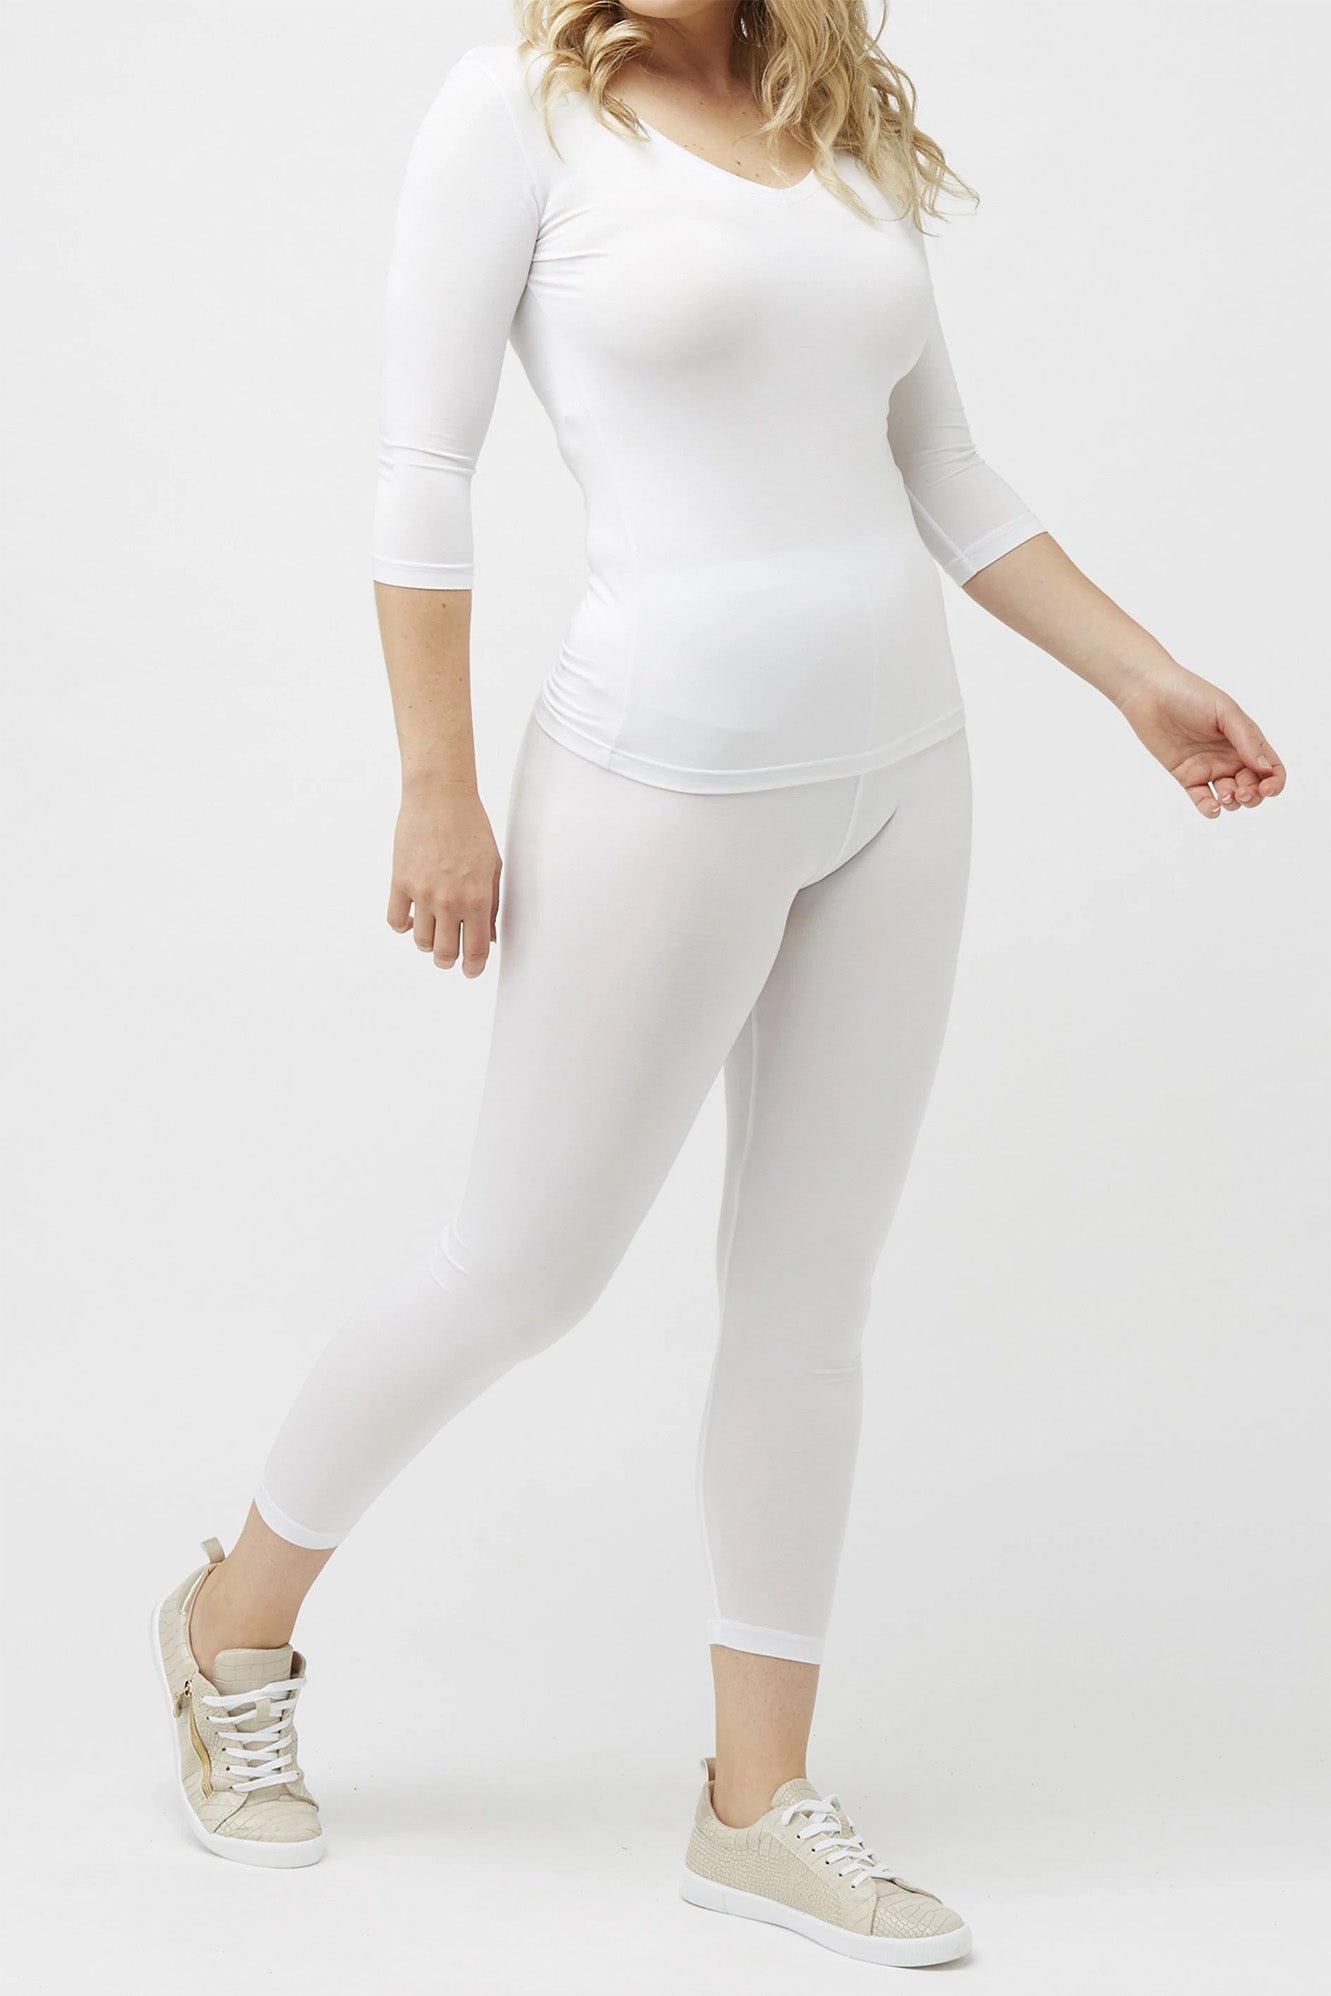 Woman wearing white Tani 89226 Leggings side view